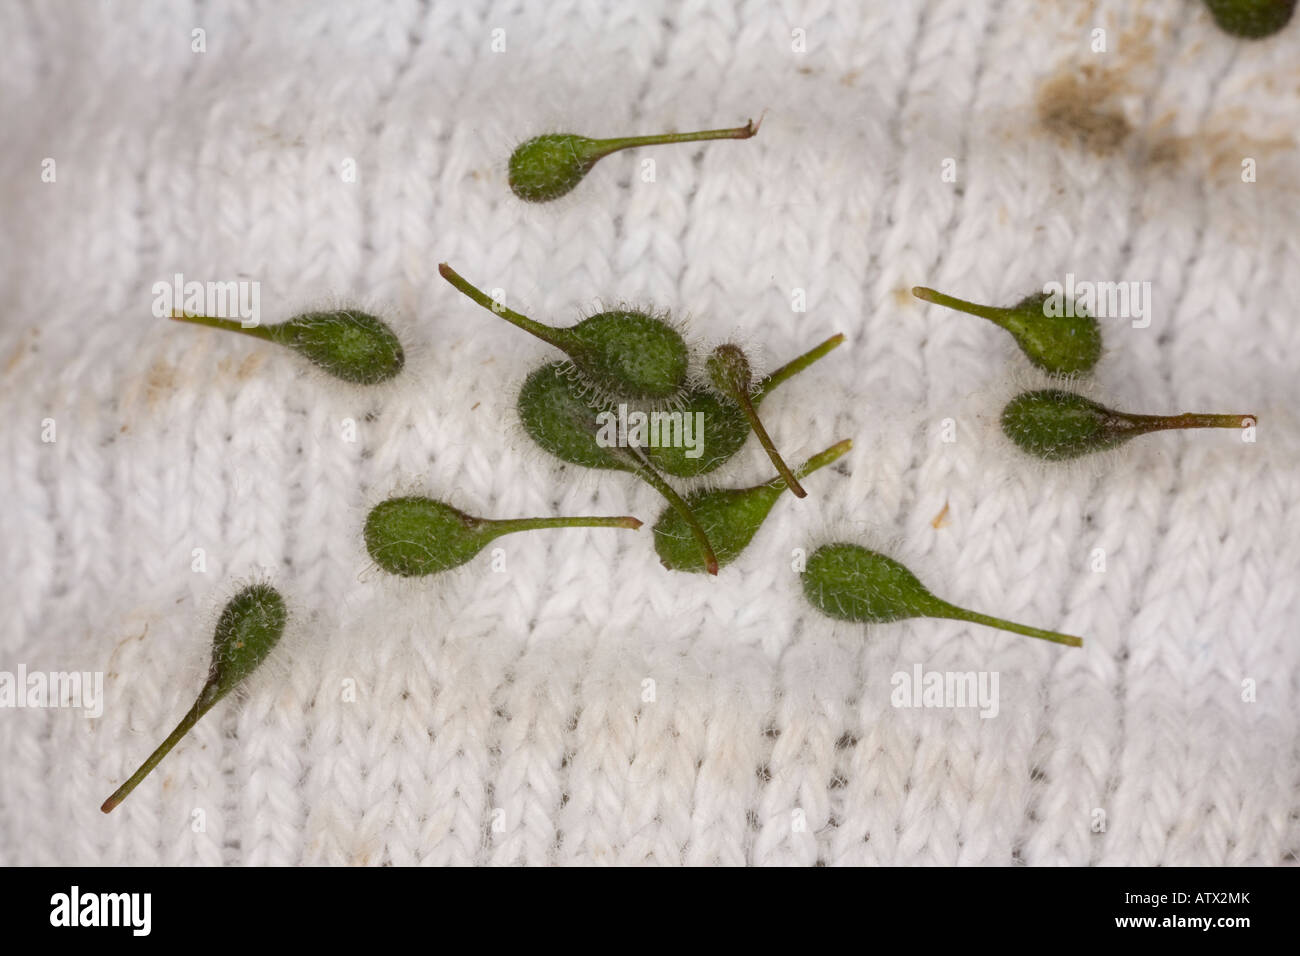 Enchanter's nightshade (Circaea lutetiana) seeds on white sock, close-up Stock Photo